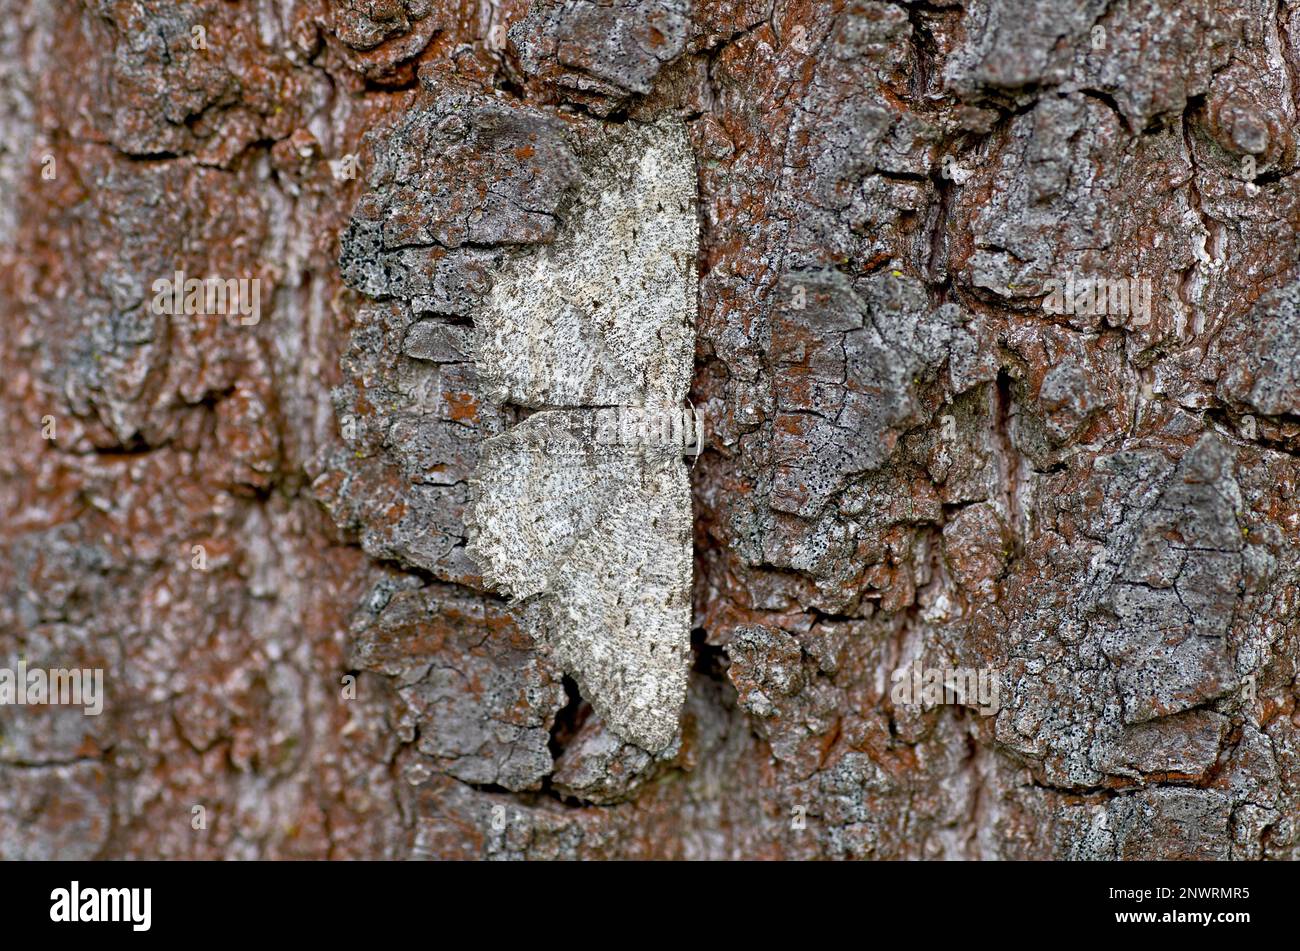 Engrailed (Ectropis crepuscularia) (Motte), Schmetterling, Motte, Insekt, Flügel, Baumrinde, Tarnung, Mimesis, die Ringrindenmotte ist perfekt Stockfoto